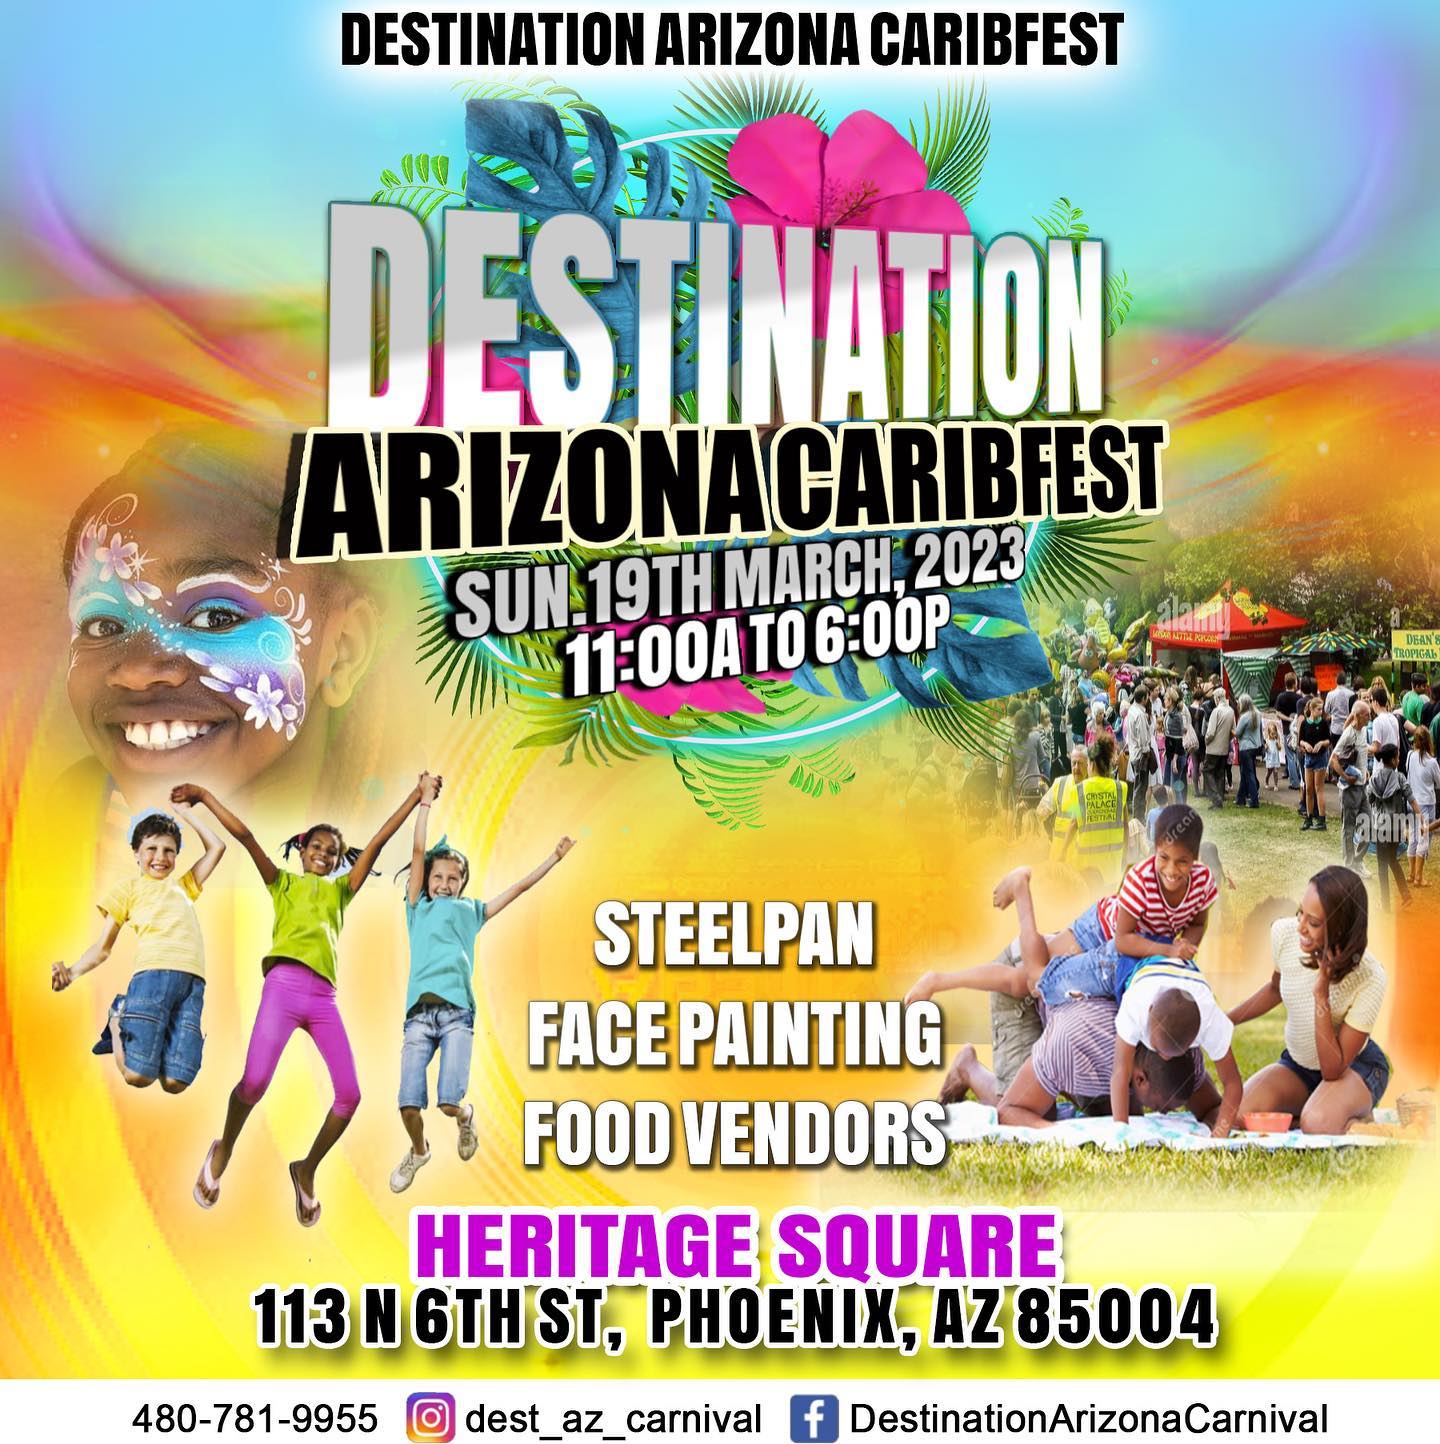 Destination Arizona Carnival - CaribFest